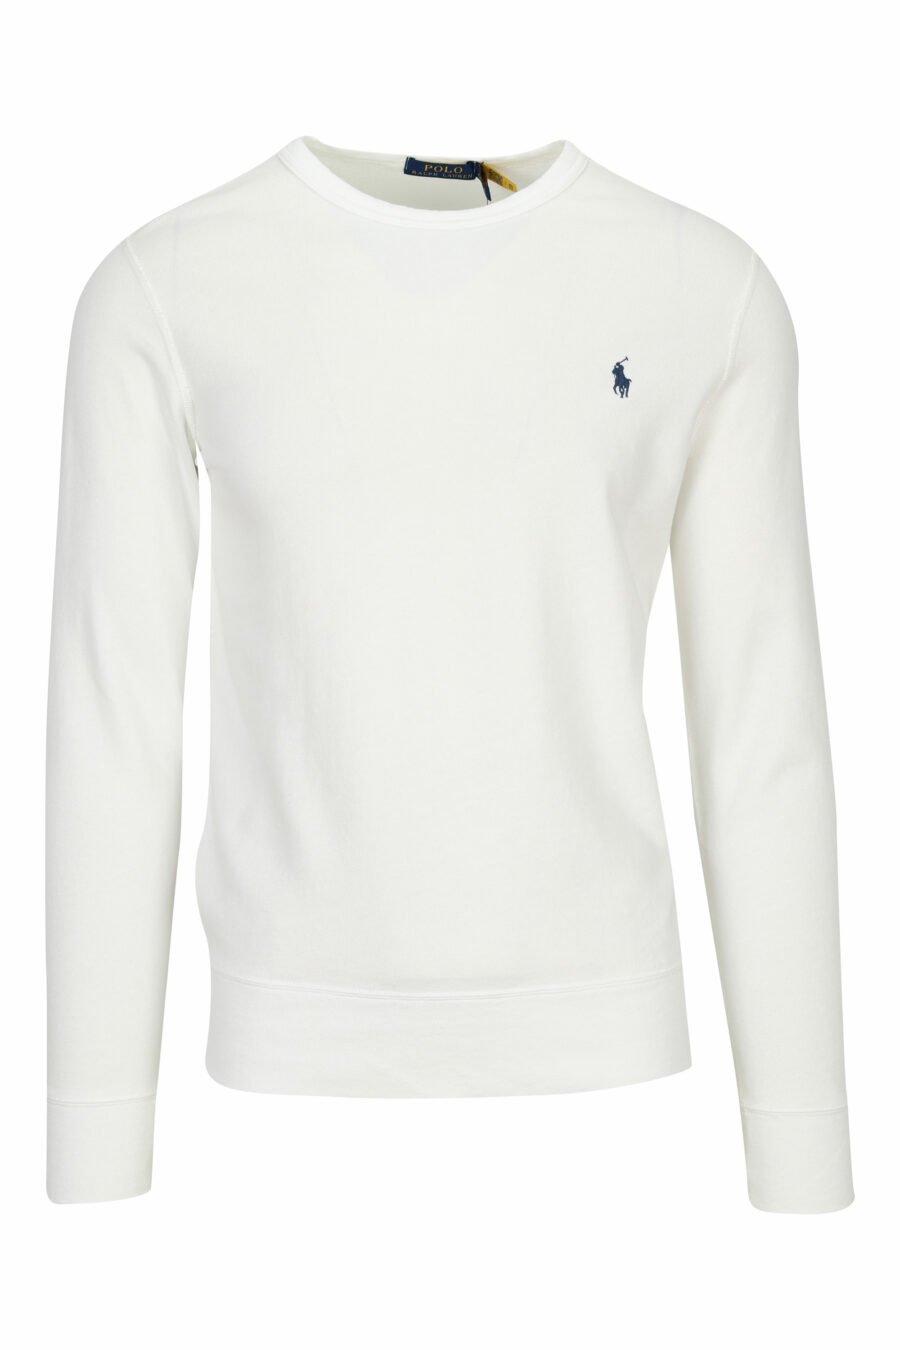 Weißes Sweatshirt mit Minilogue "Polo" - 3616851410768